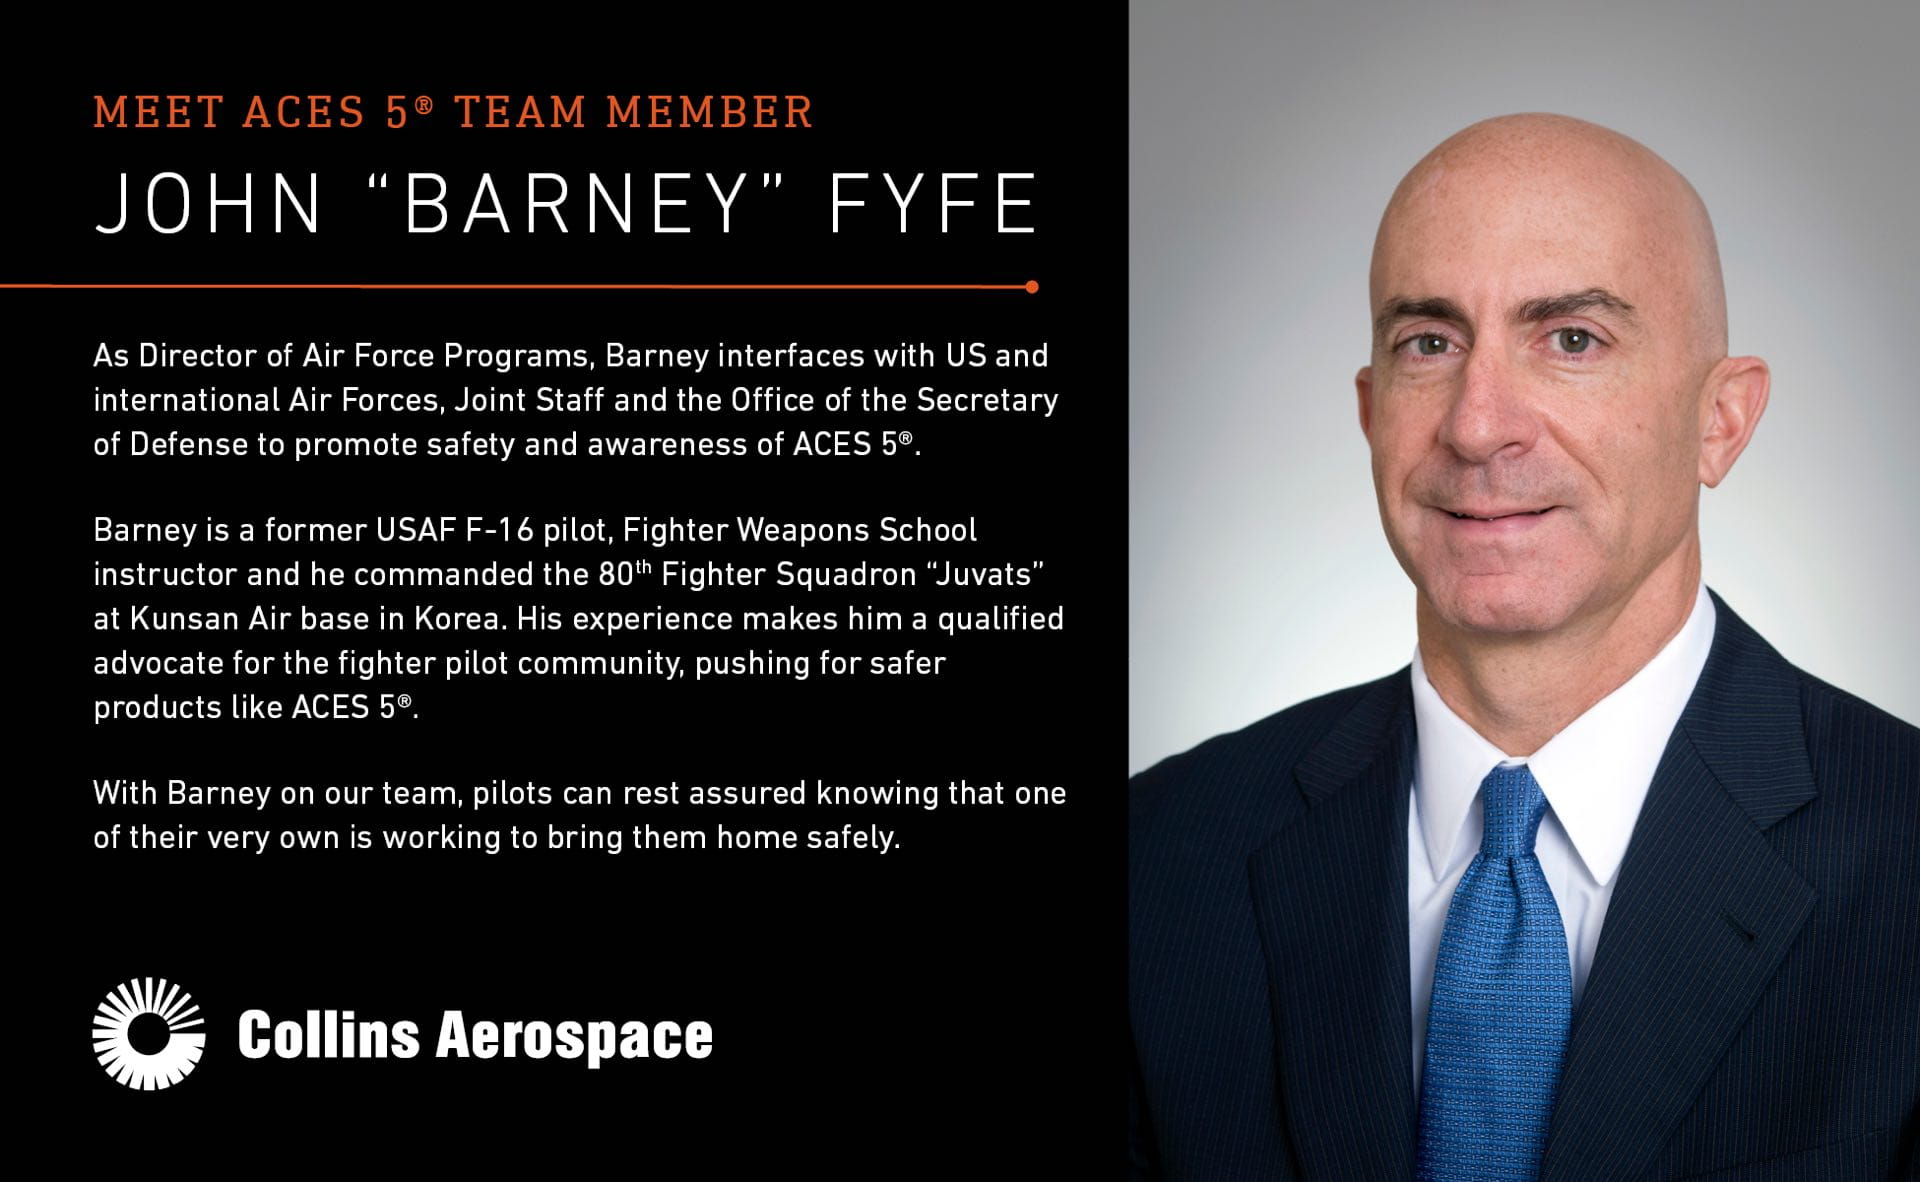 John 'Barney' Fyfe profile info